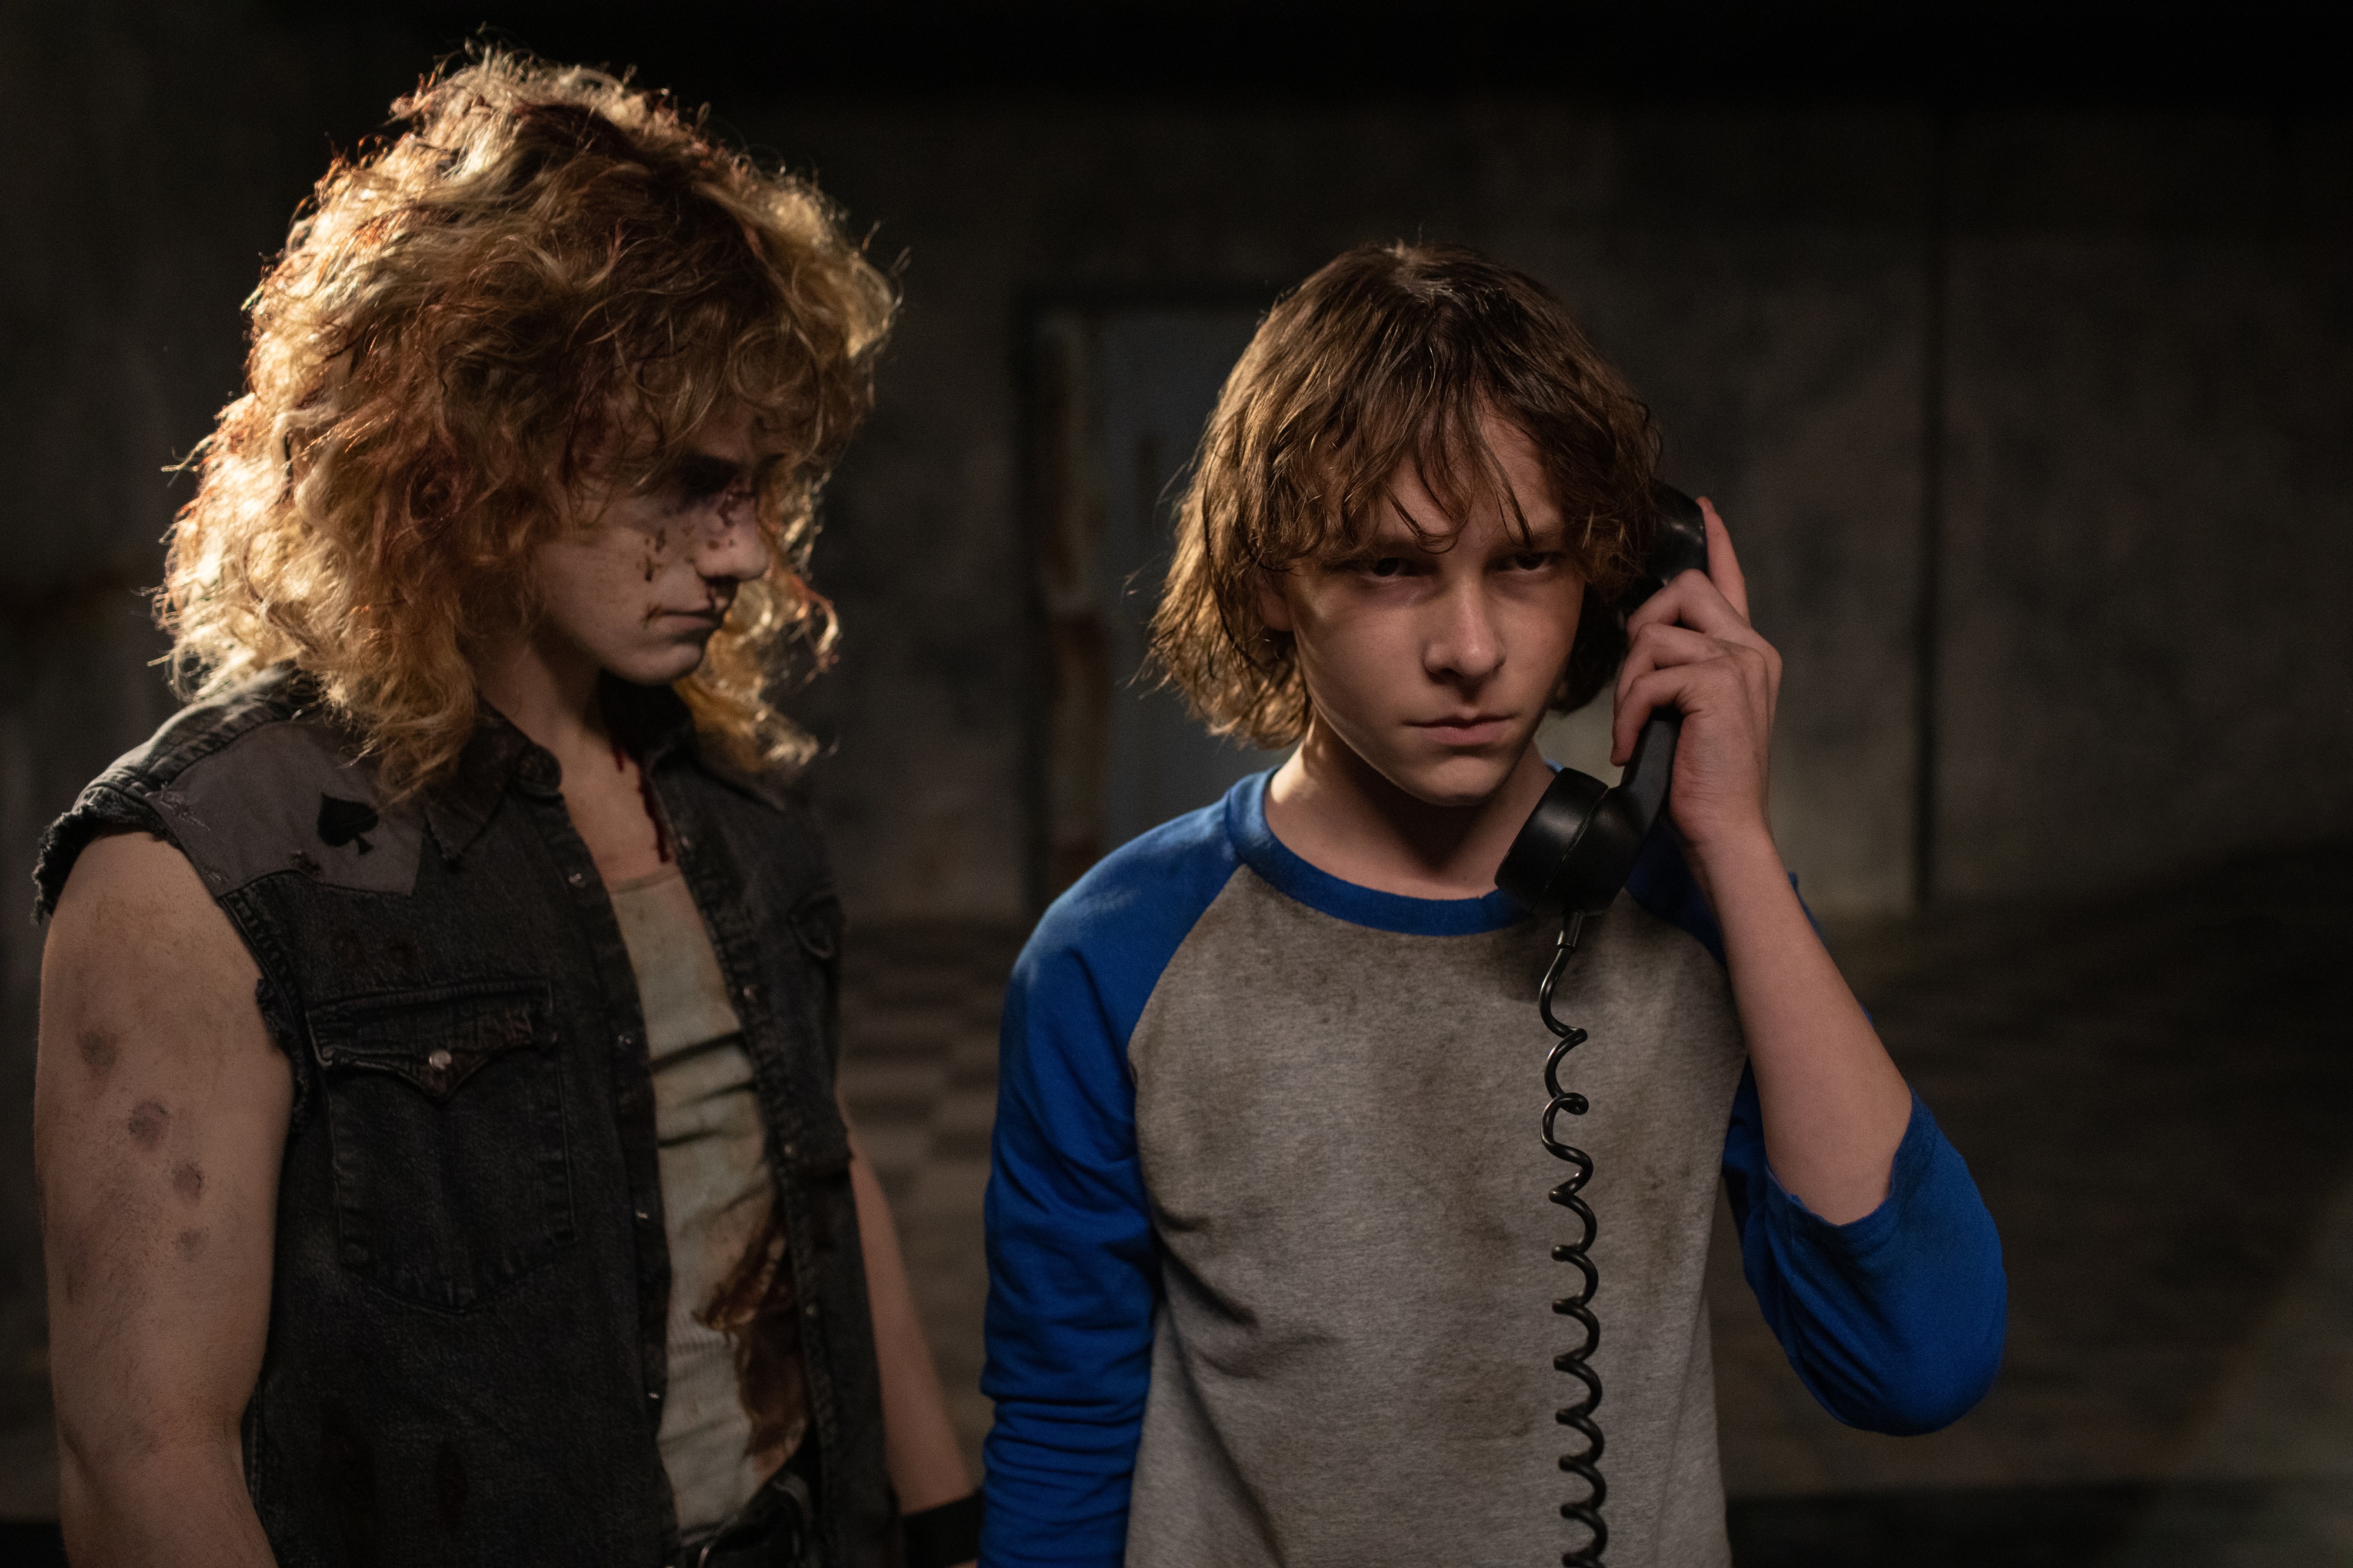 The Black Phone' stars Ethan Hawke as a creepy child abductor Washington Post